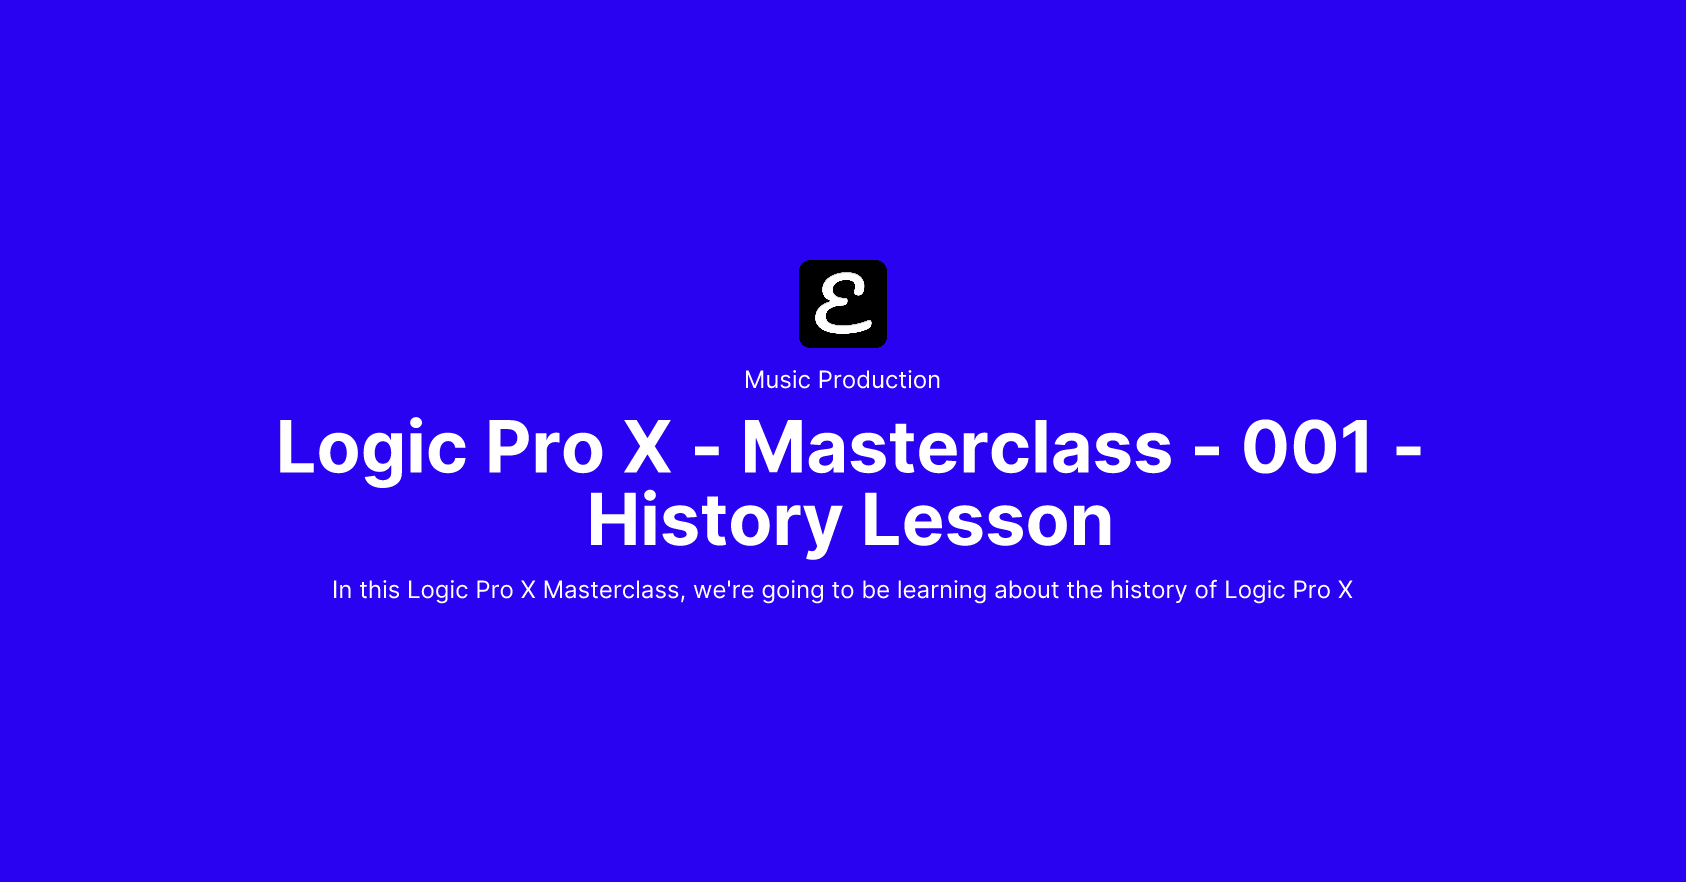 Logic Pro X - Masterclass - 001 - History Lesson by Eric David Smith